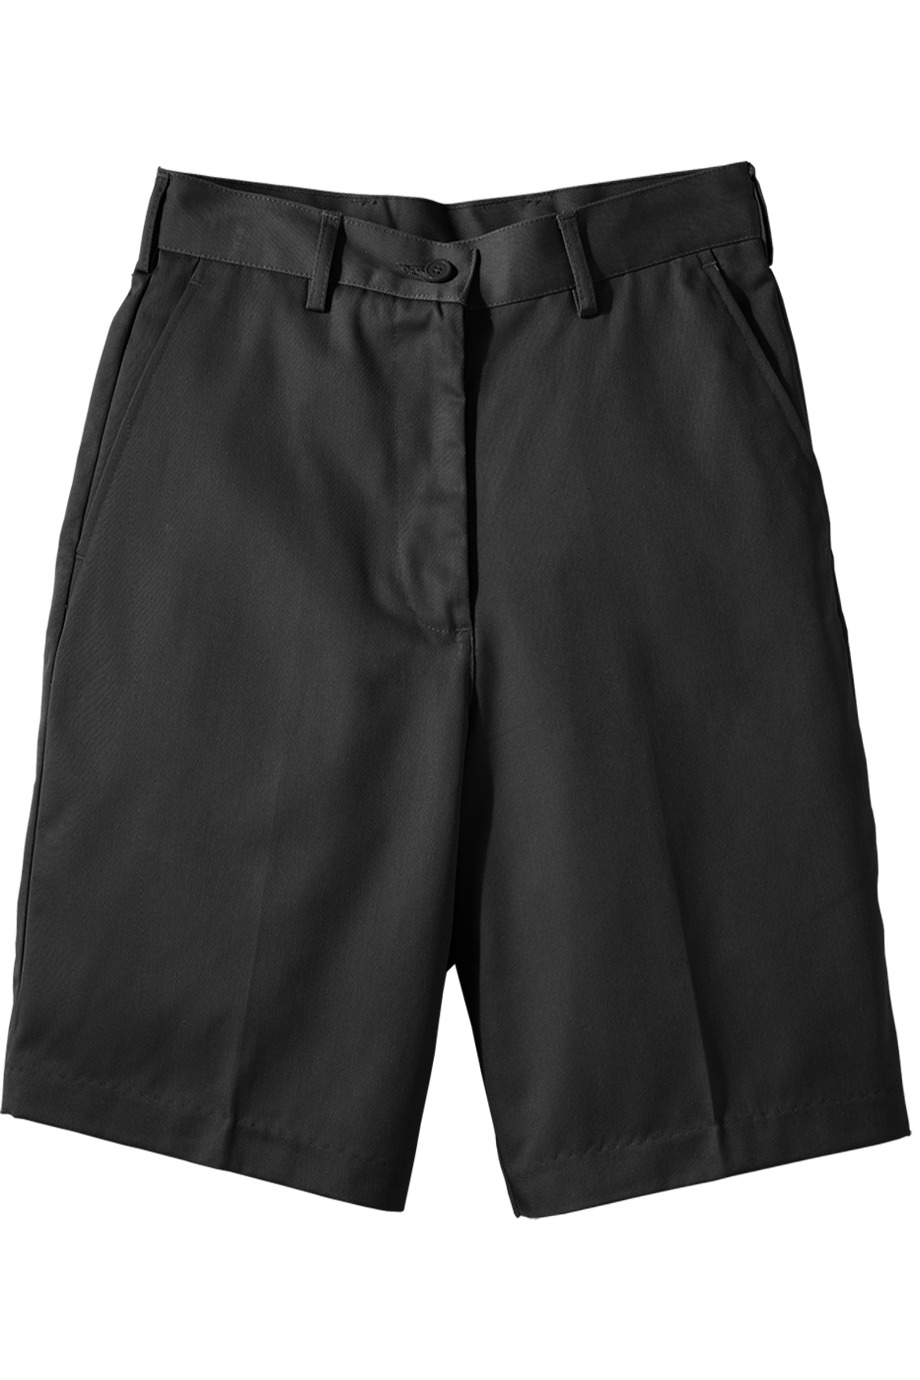 Edwards Garment 8465 - Women's Utility Flat Front Short